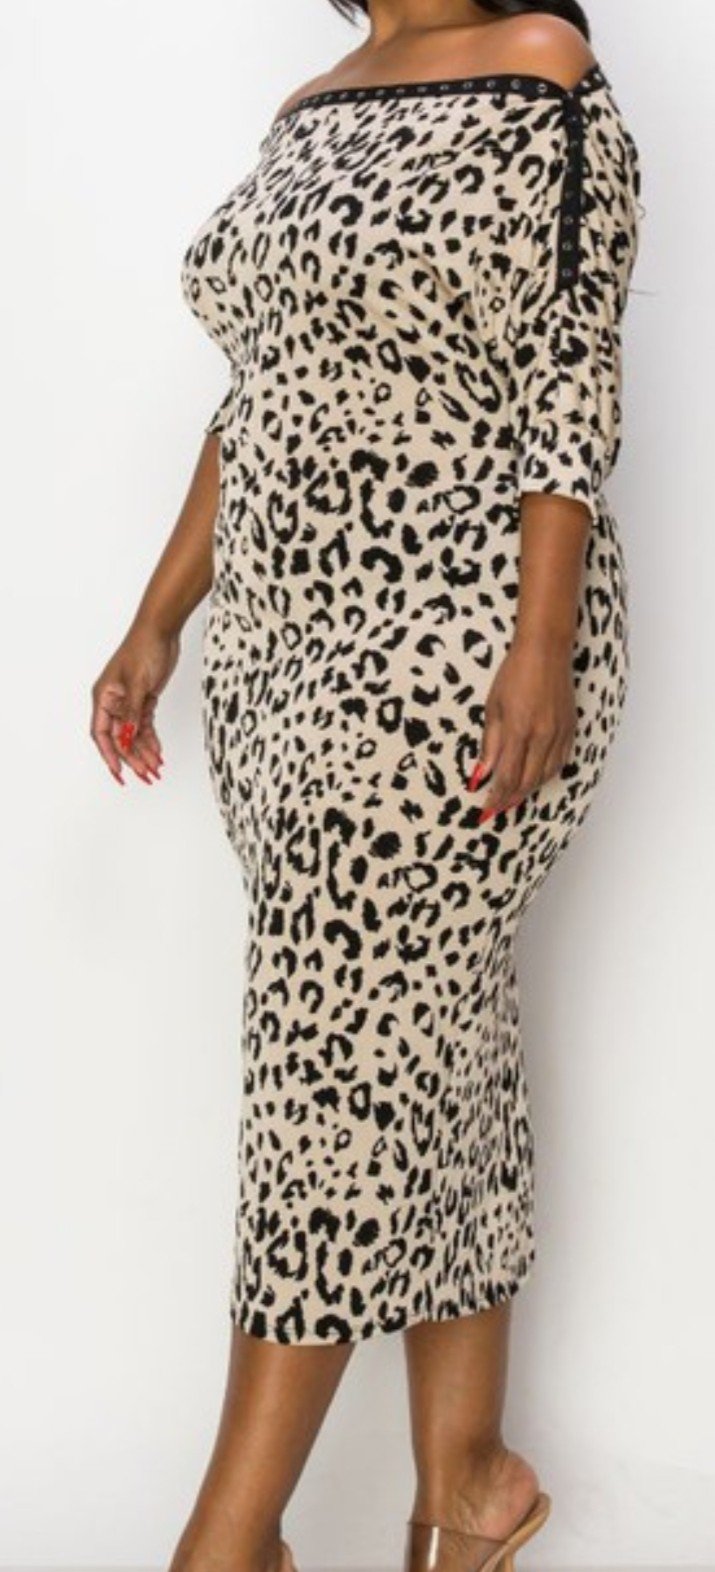 Cheetah on You Dress